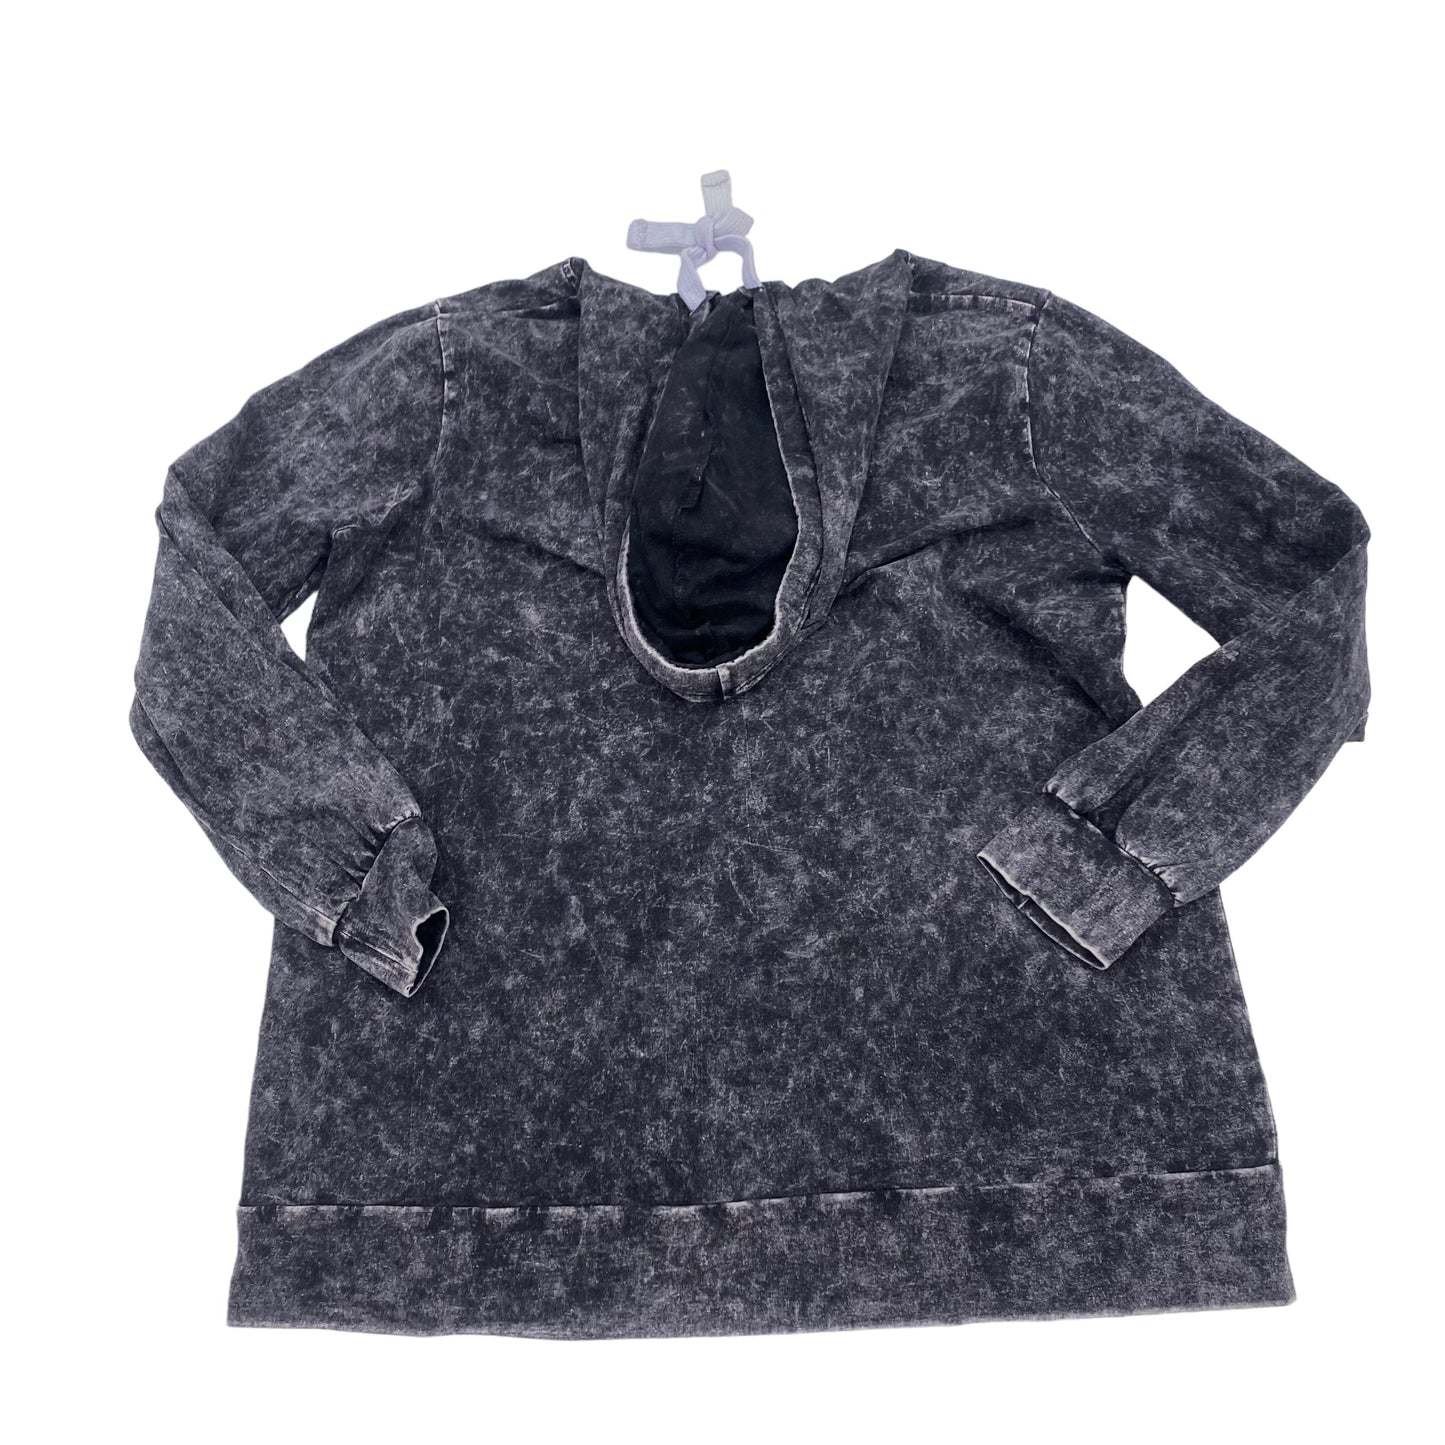 Sweatshirt Hoodie By Zenana Outfitters  Size: Xl